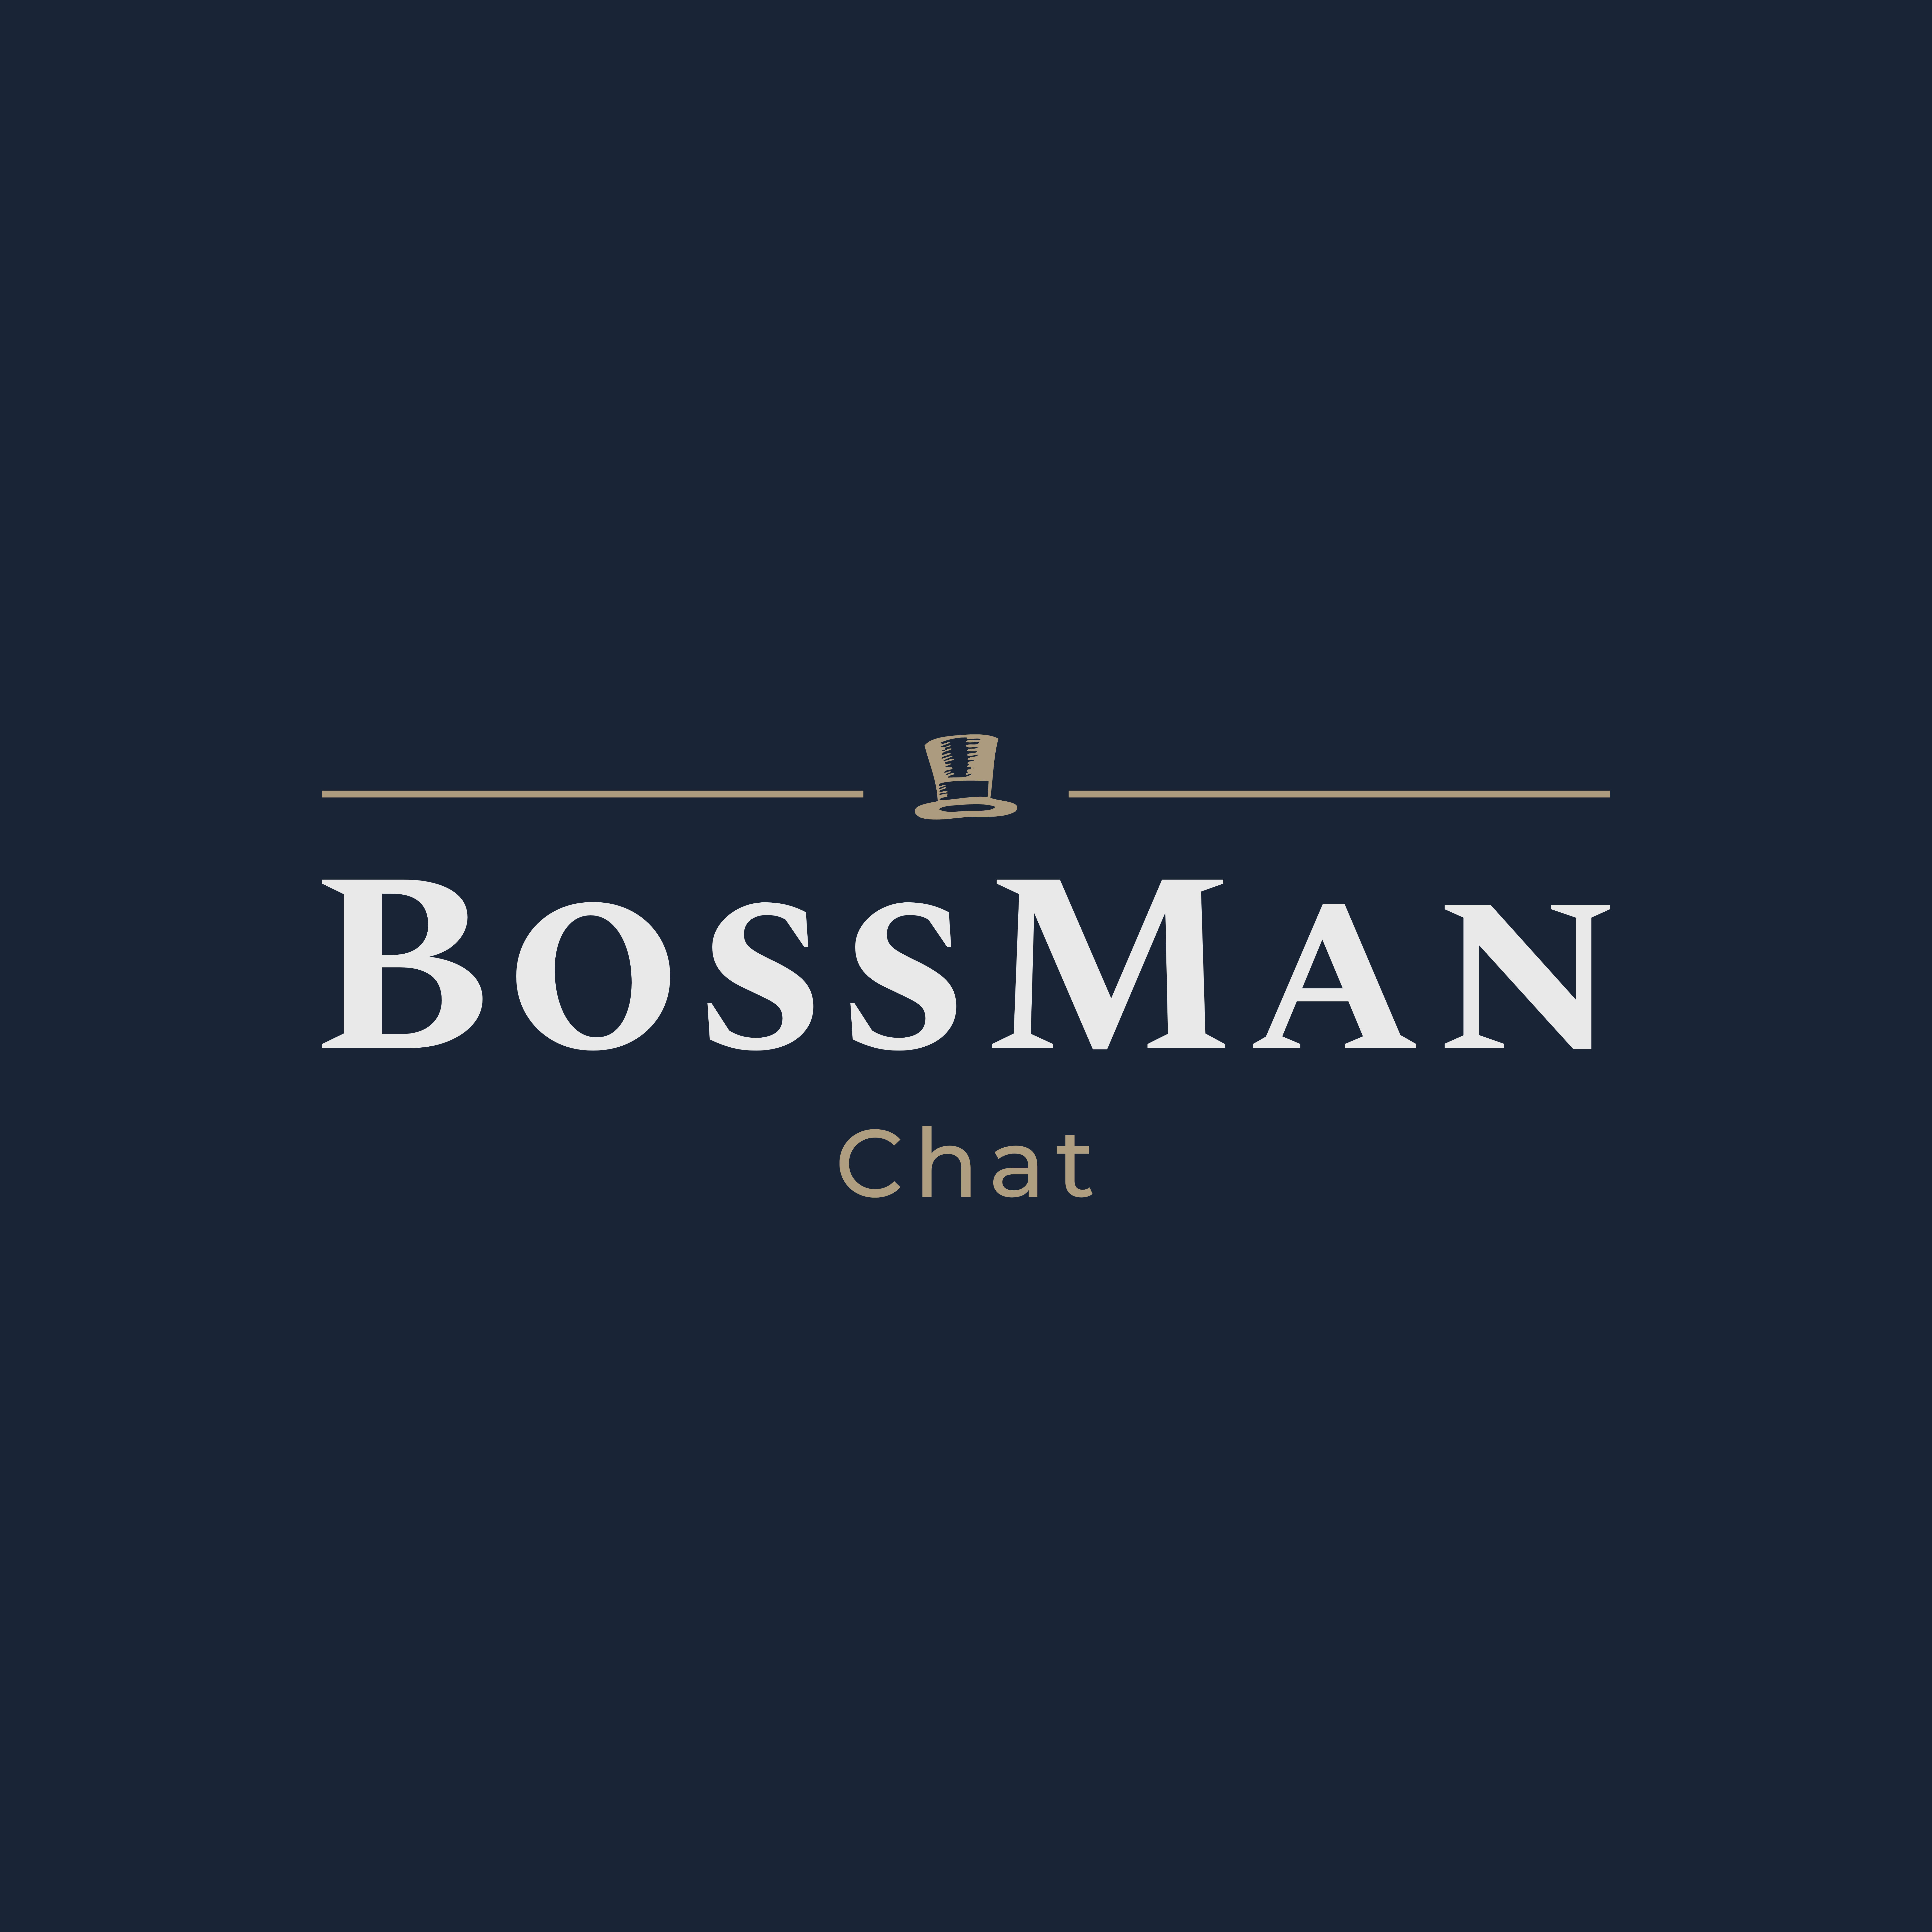 BossMan Chat Logo